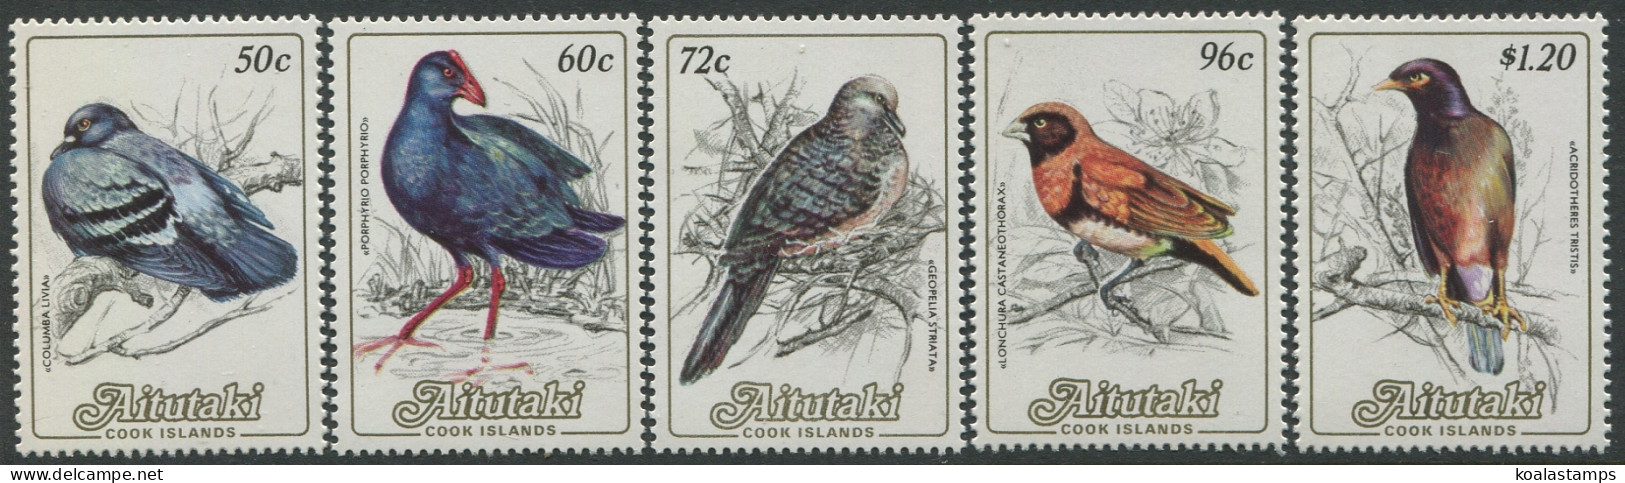 Aitutaki 1984 SG485-489 Birds (5) MNH - Cookinseln